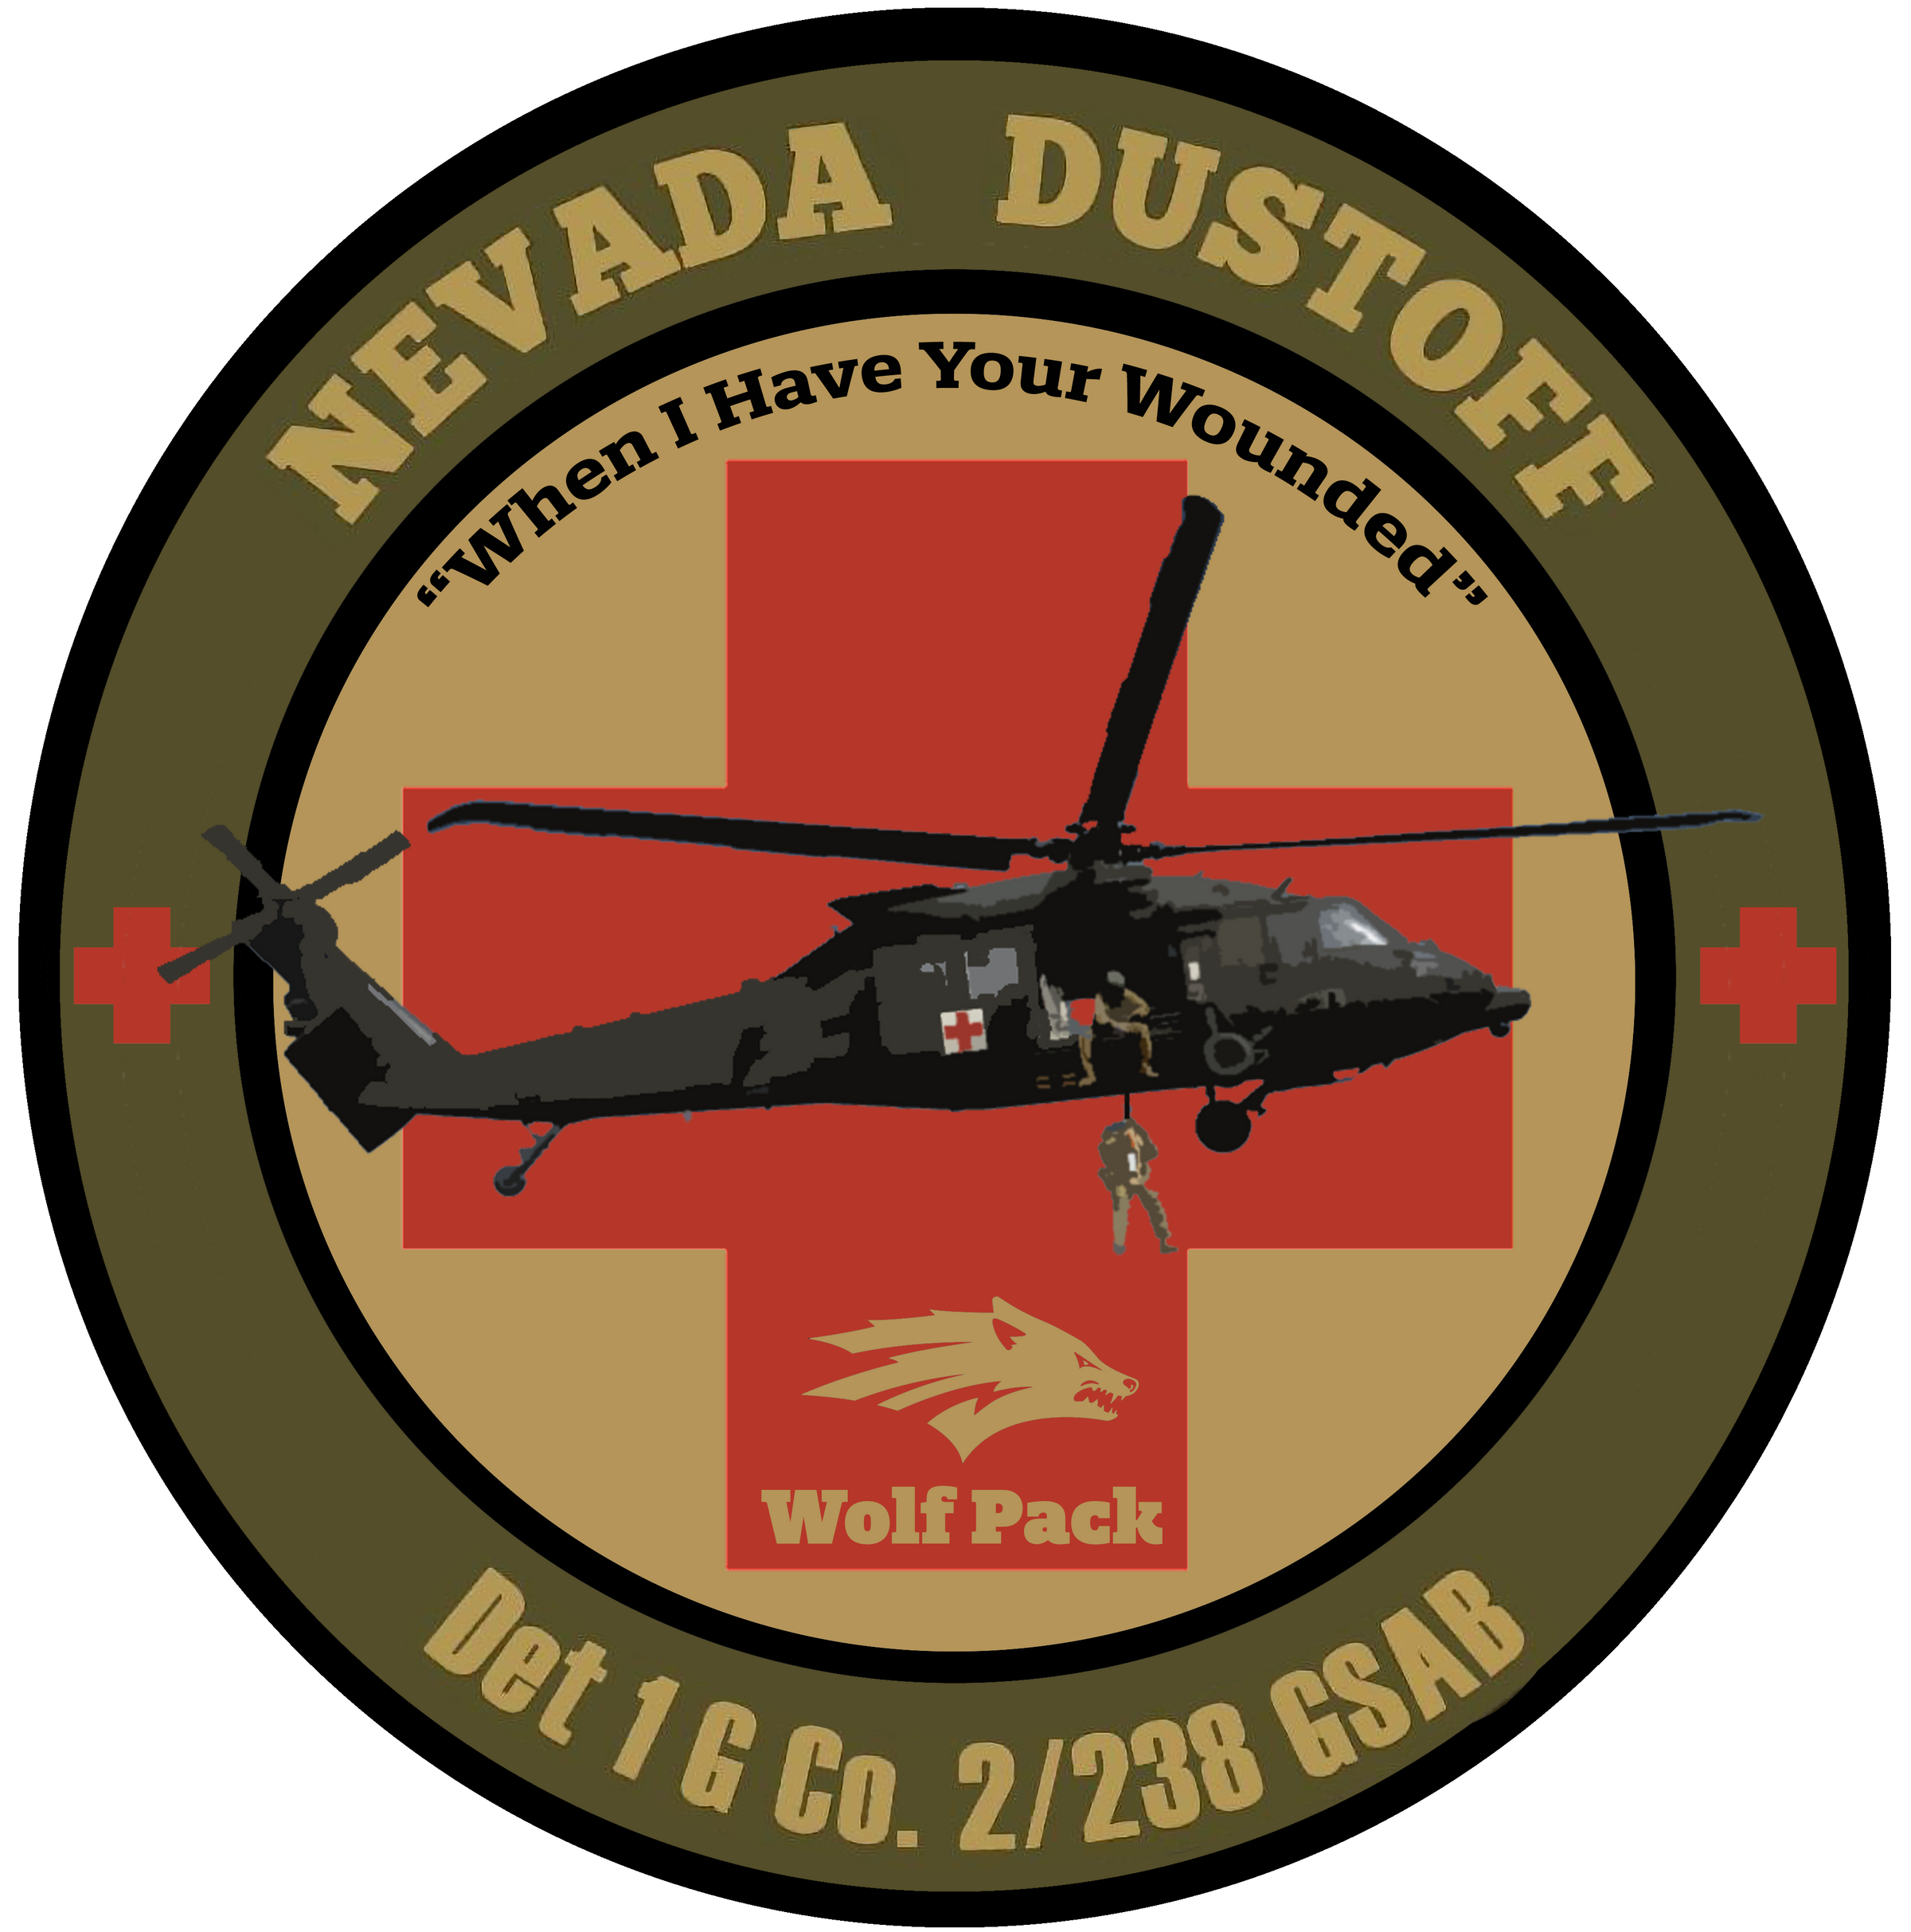 Det 1 G Co, 2-238 GSAB "Nevada Dustoff"